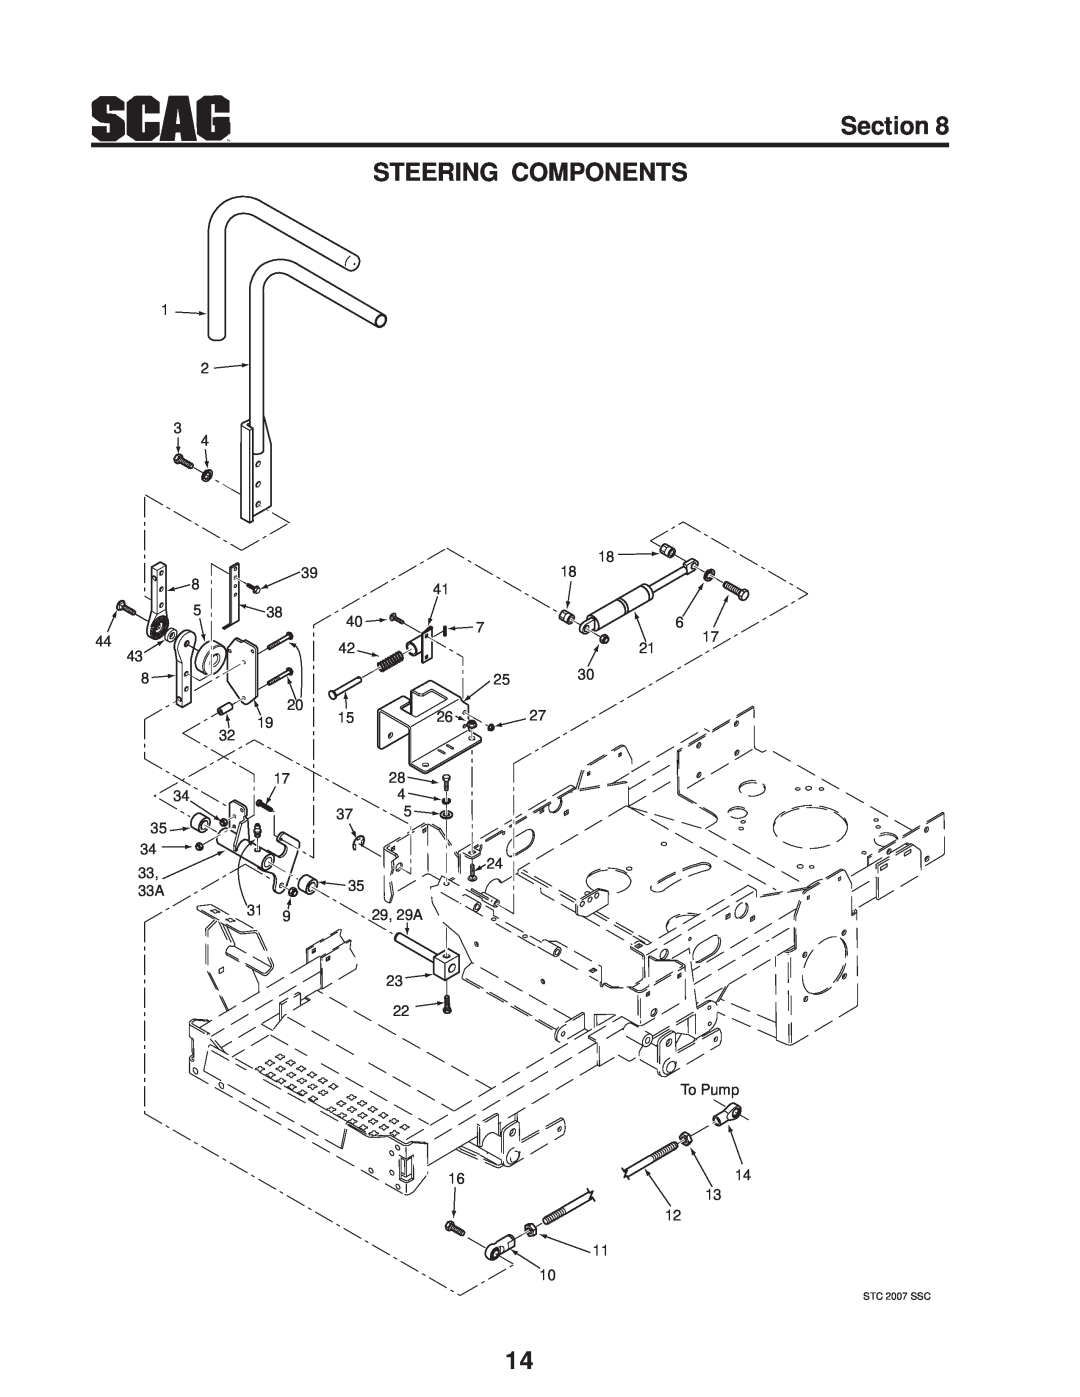 Scag Power Equipment STC48V-19KAI, SMTC-48V, STC48V-23CV manual 29, 29A, Steering Components, Section, To Pump, STC 2007 SSC 